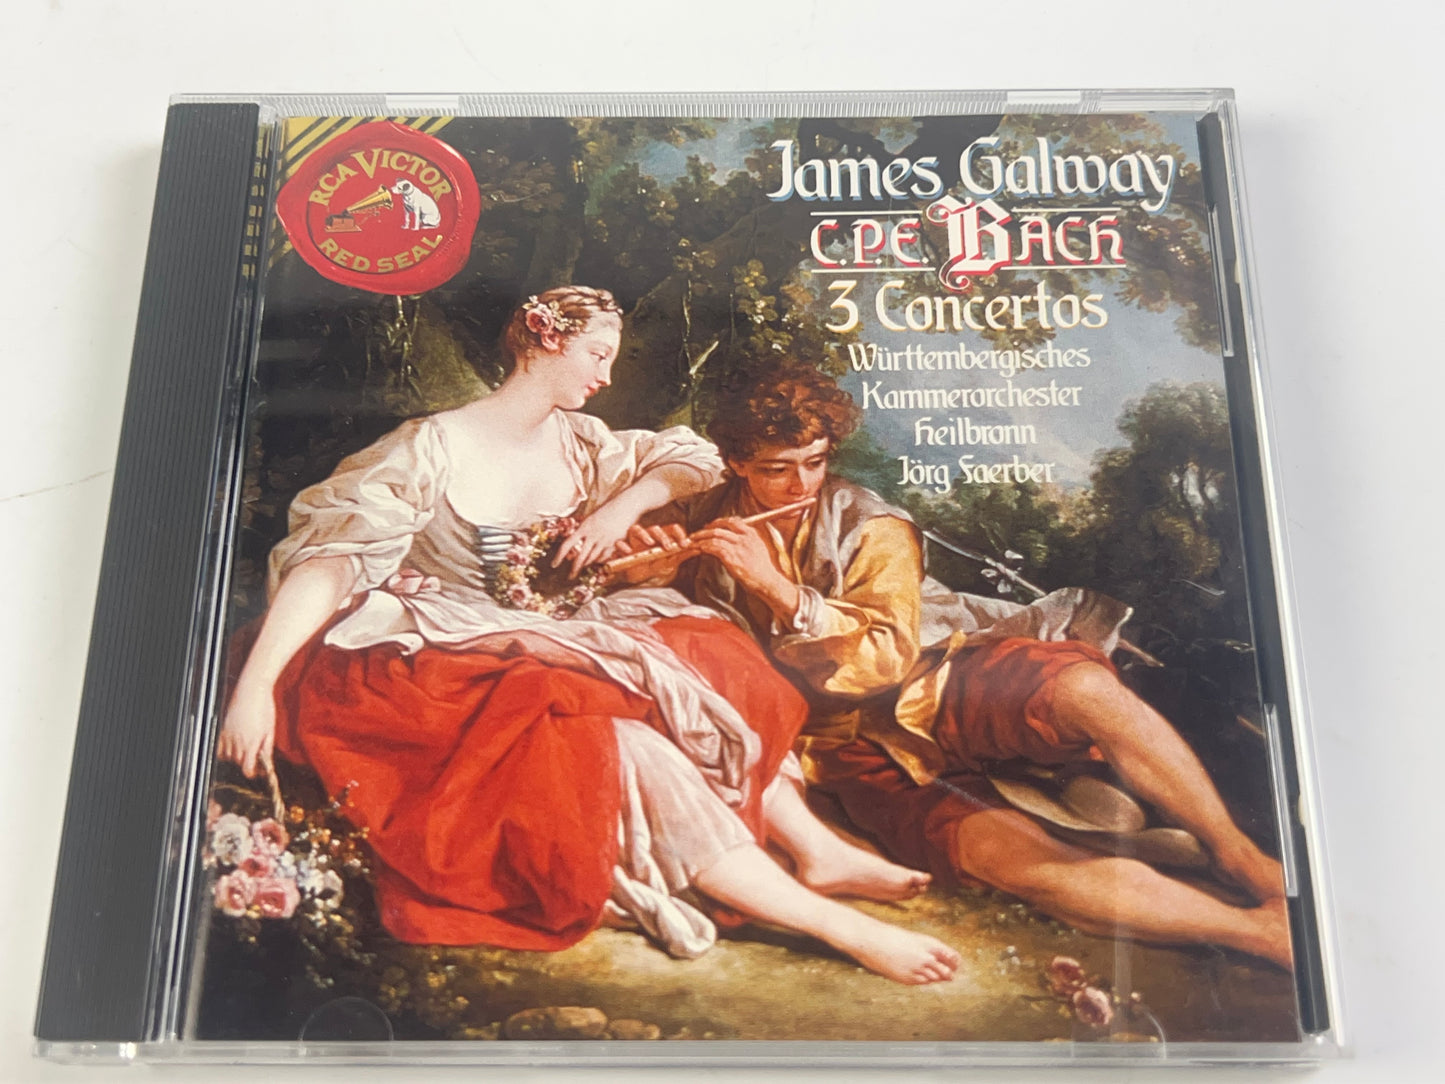 James Galway - C.P.E. Bach: 3 Concertos - Music CD